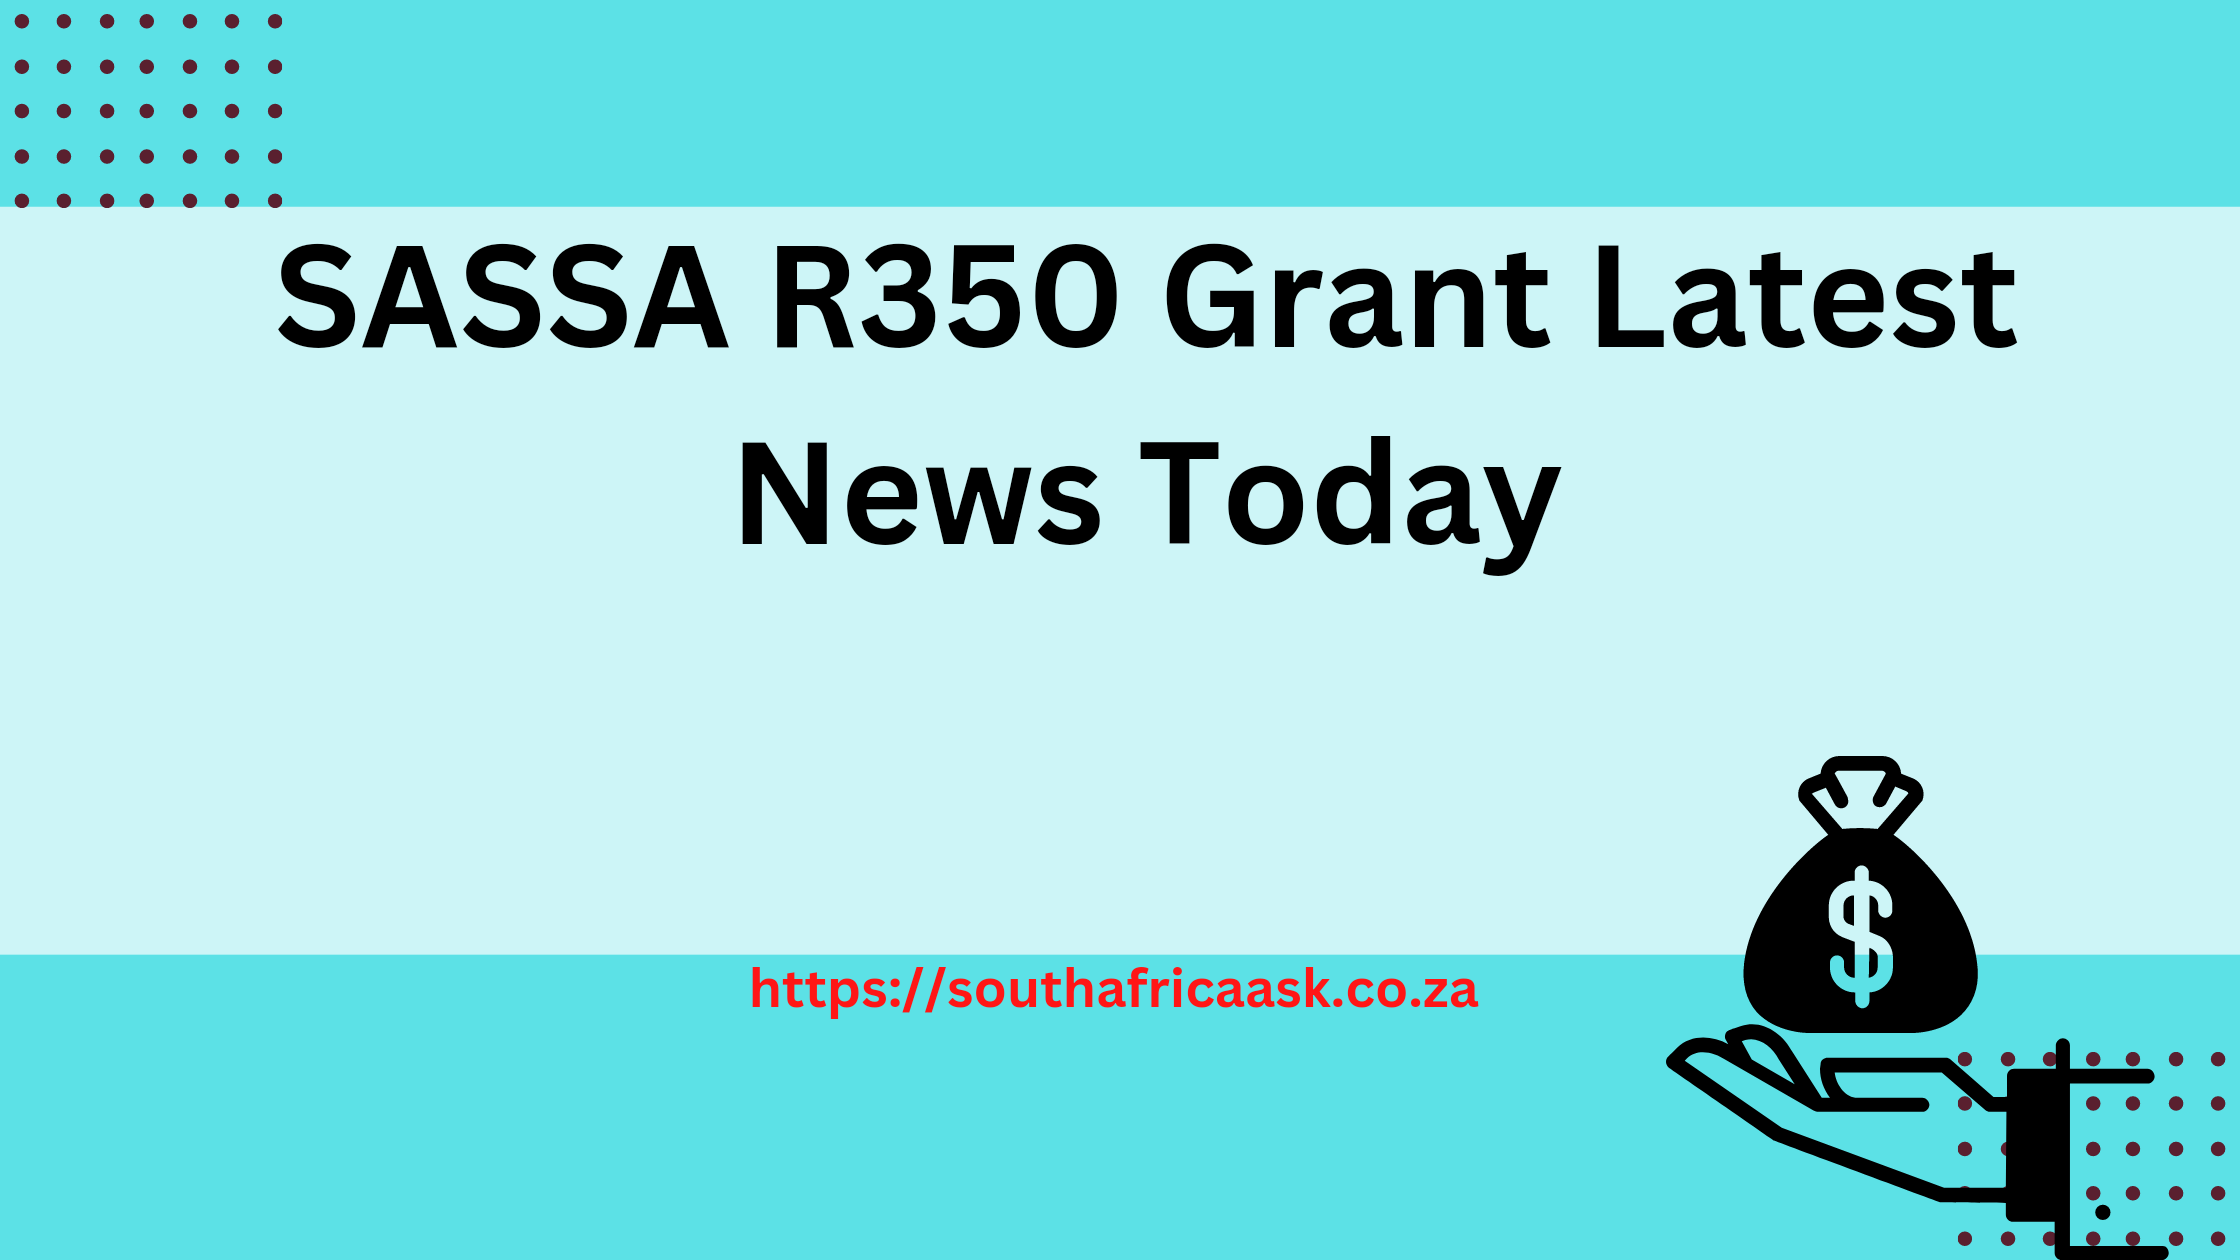 SASSA R350 Grant Latest News Today